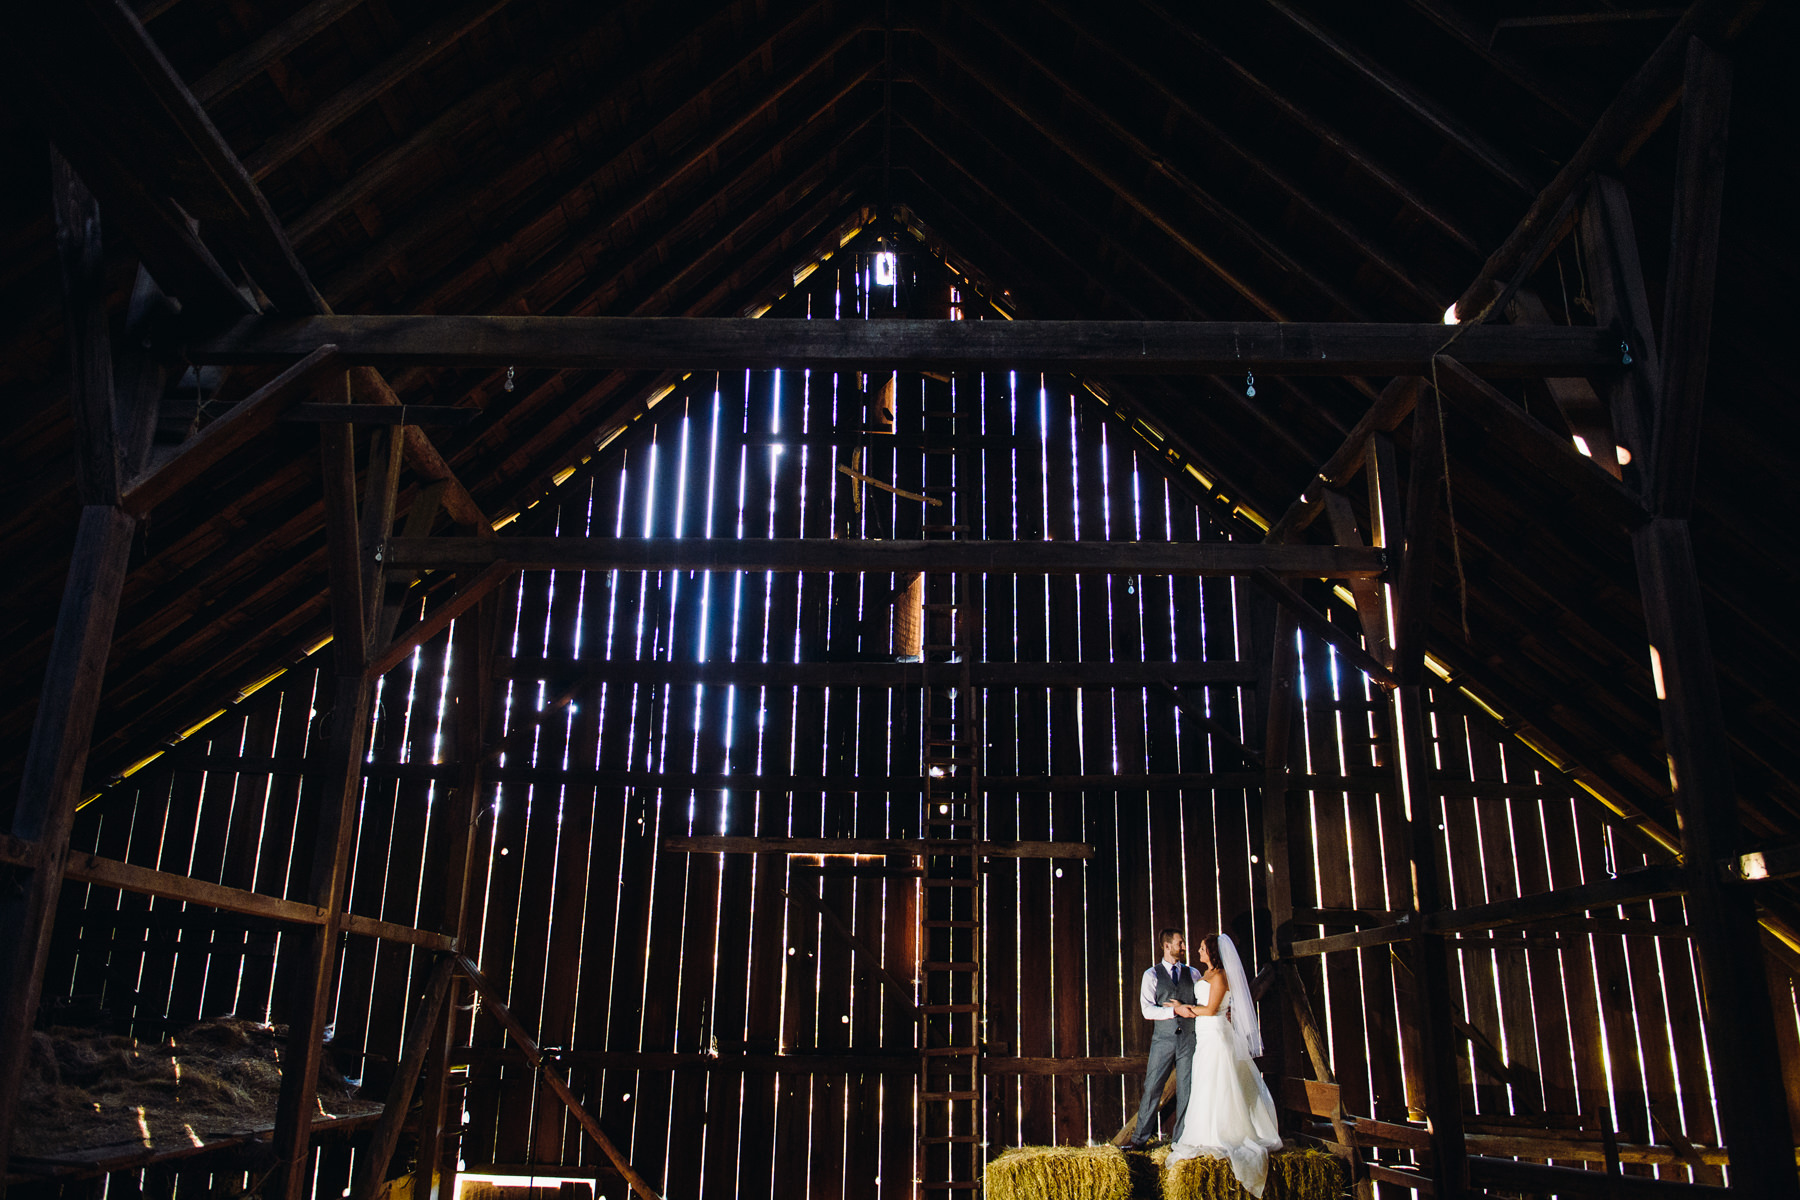 Pomeroy Farms barn wedding photos